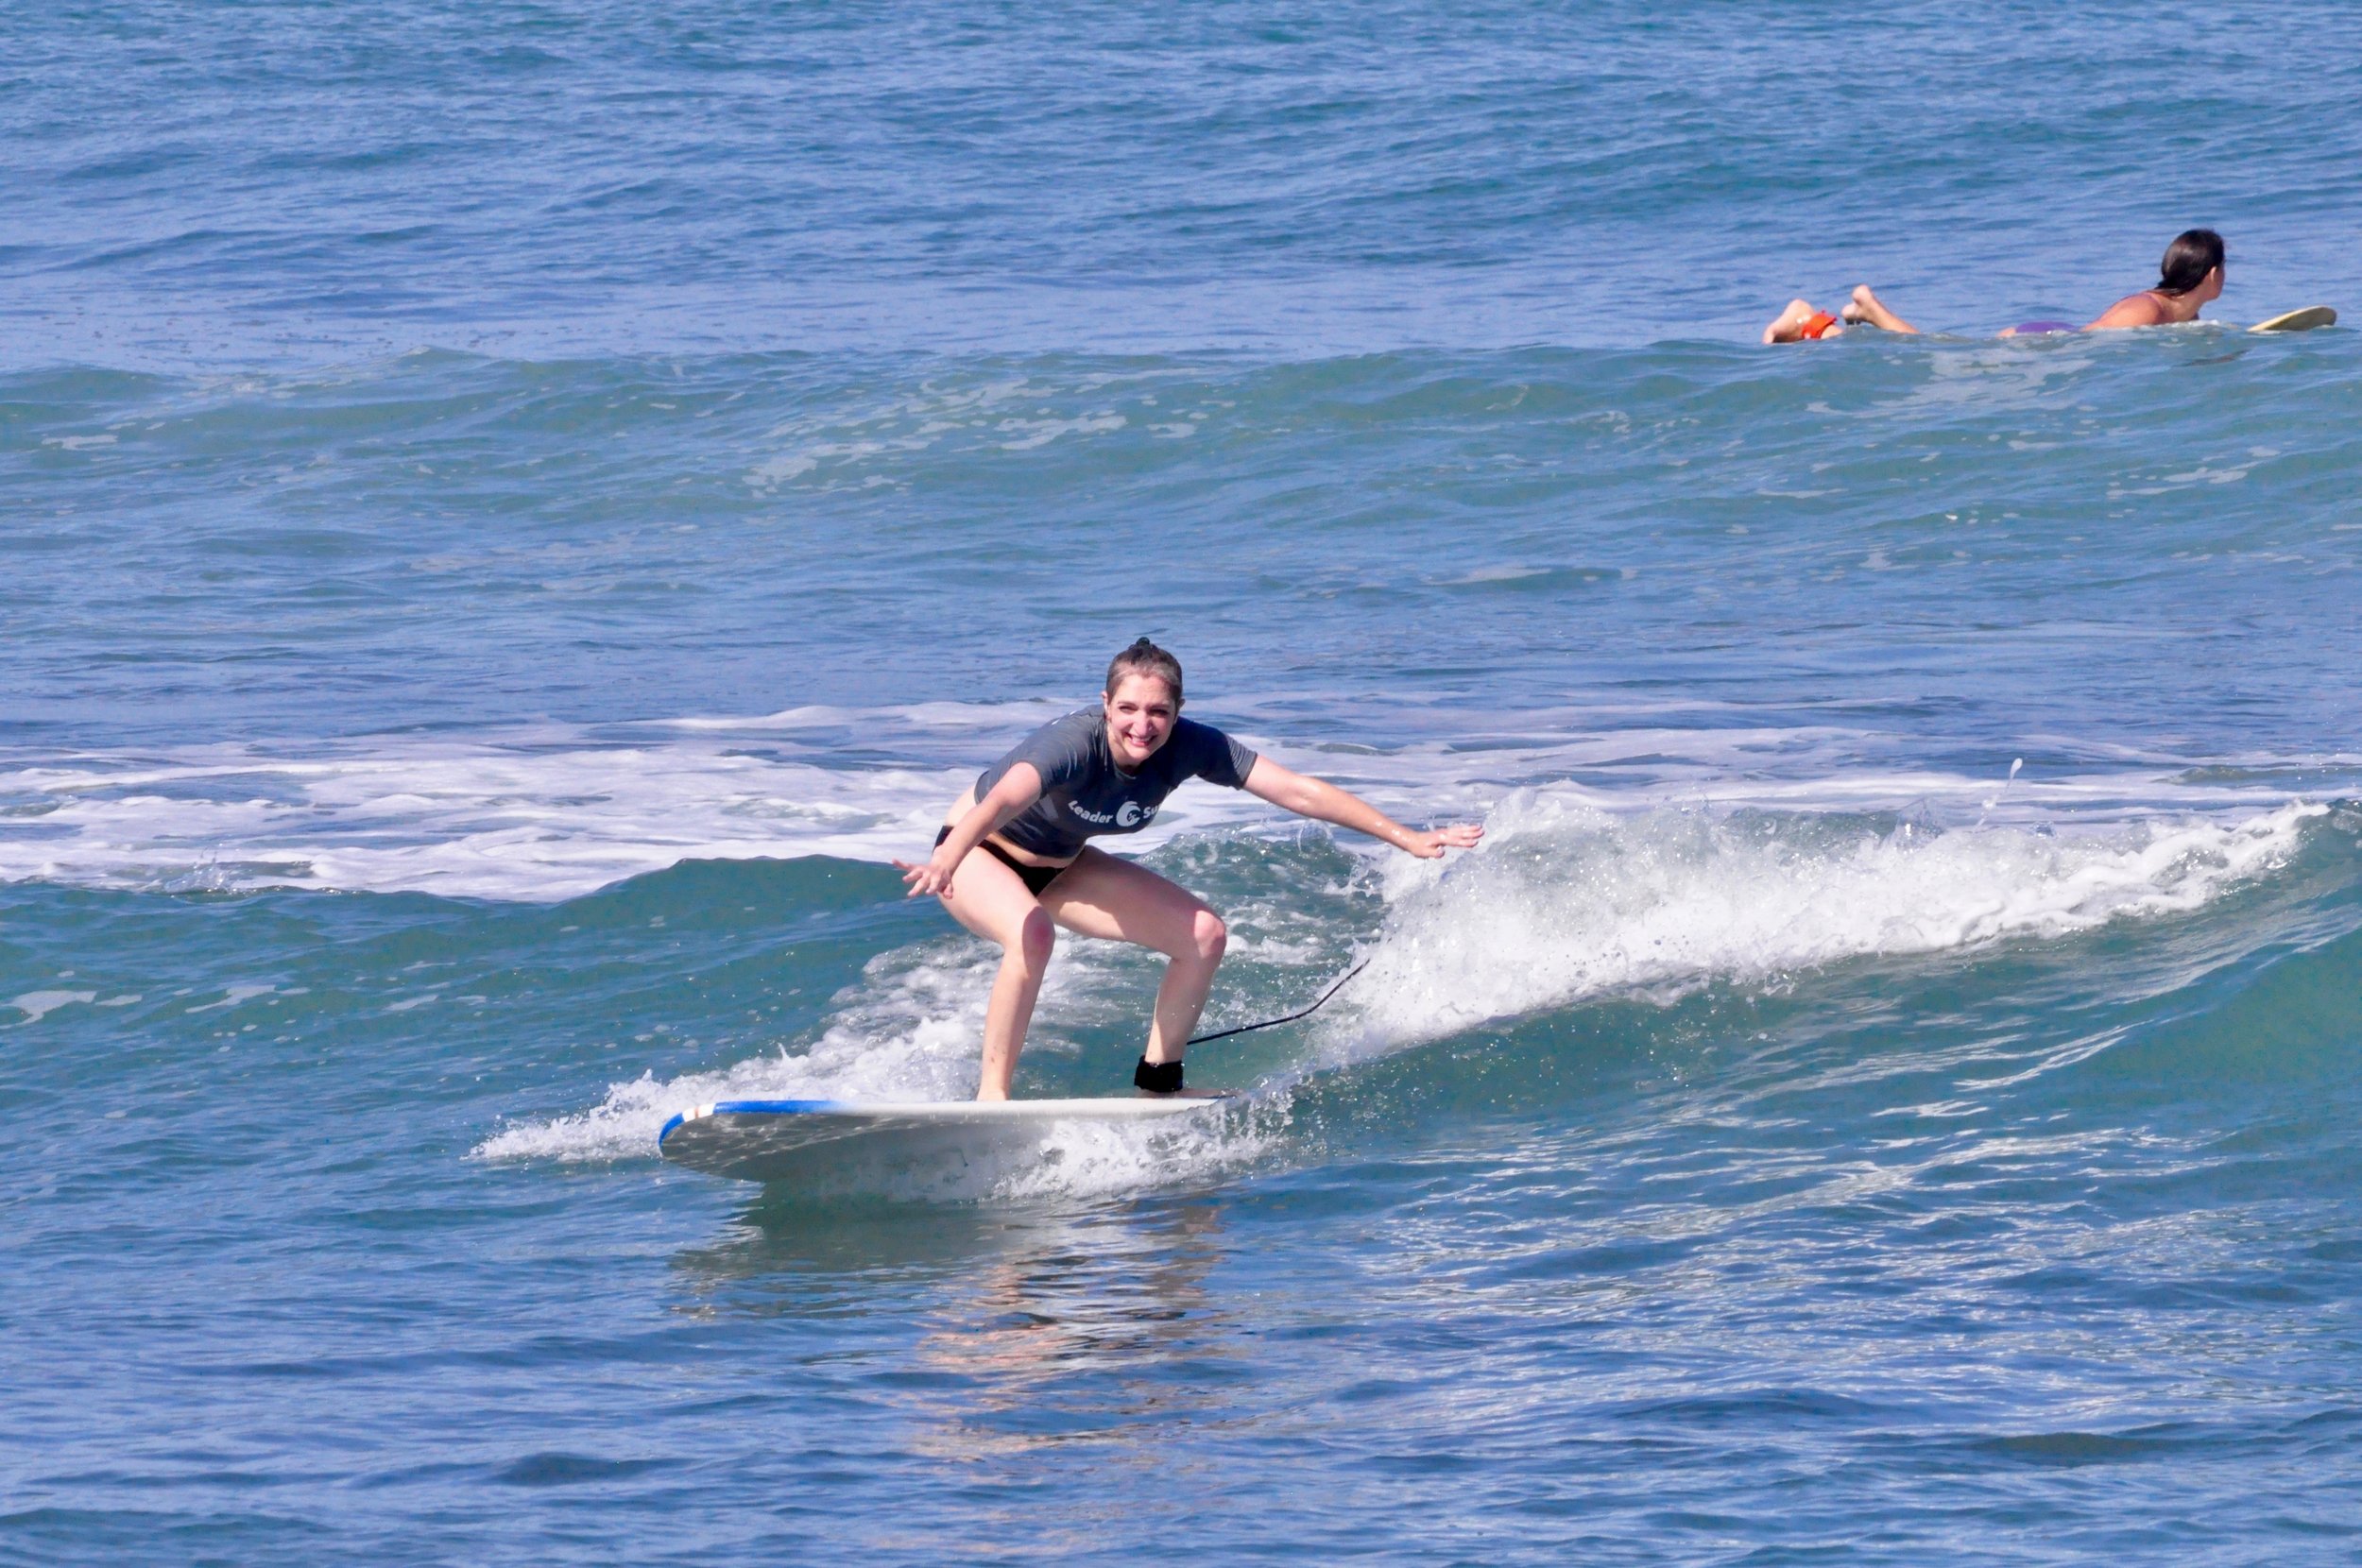 Ally riding a wave